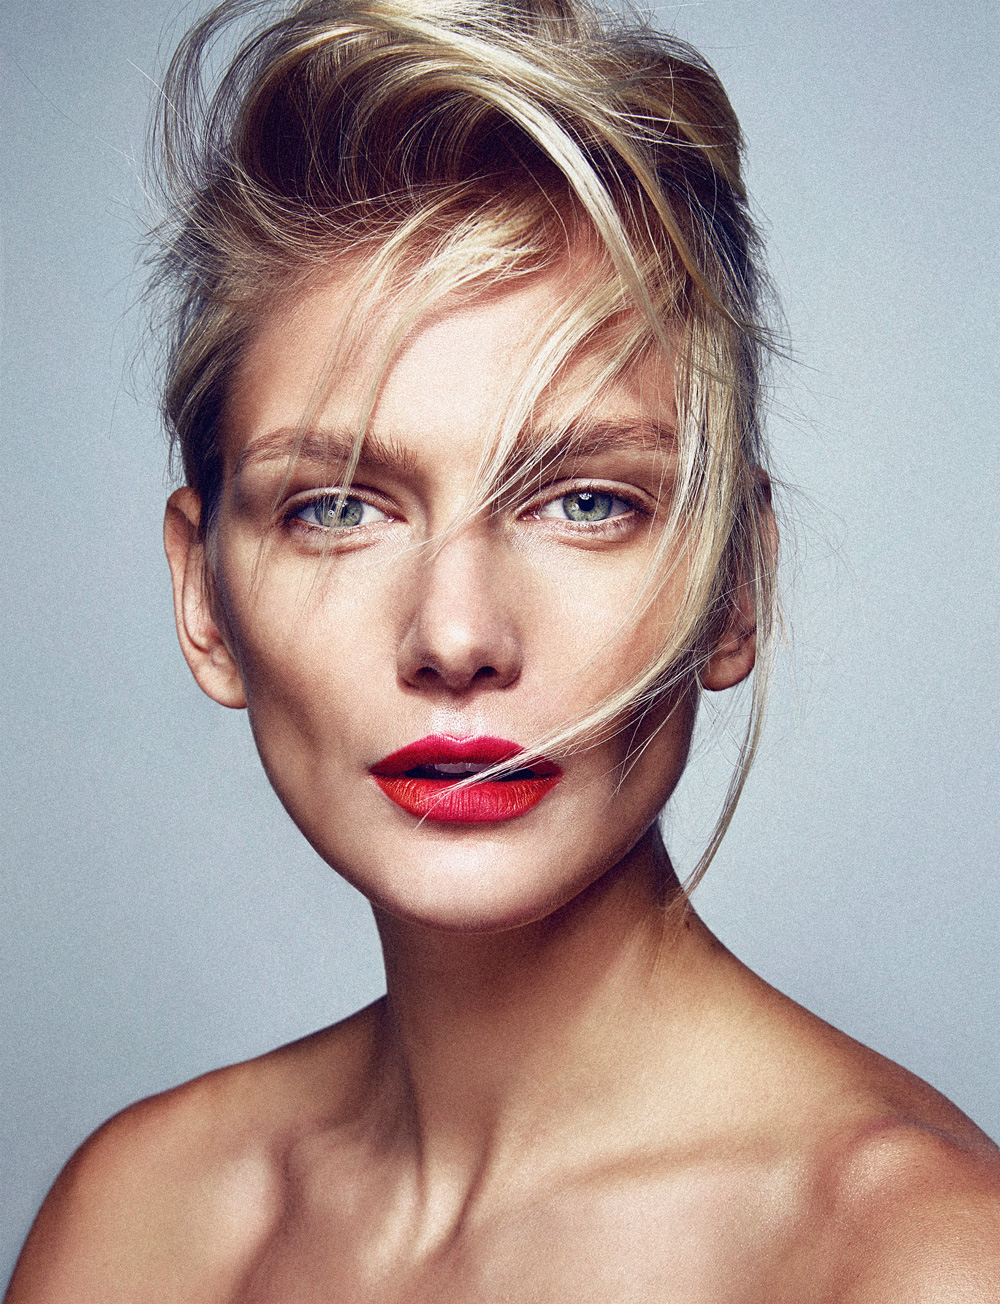 philipp jelenska zuzana straska christopher koller wienerin magazine makeup hair modeling beauty closeup